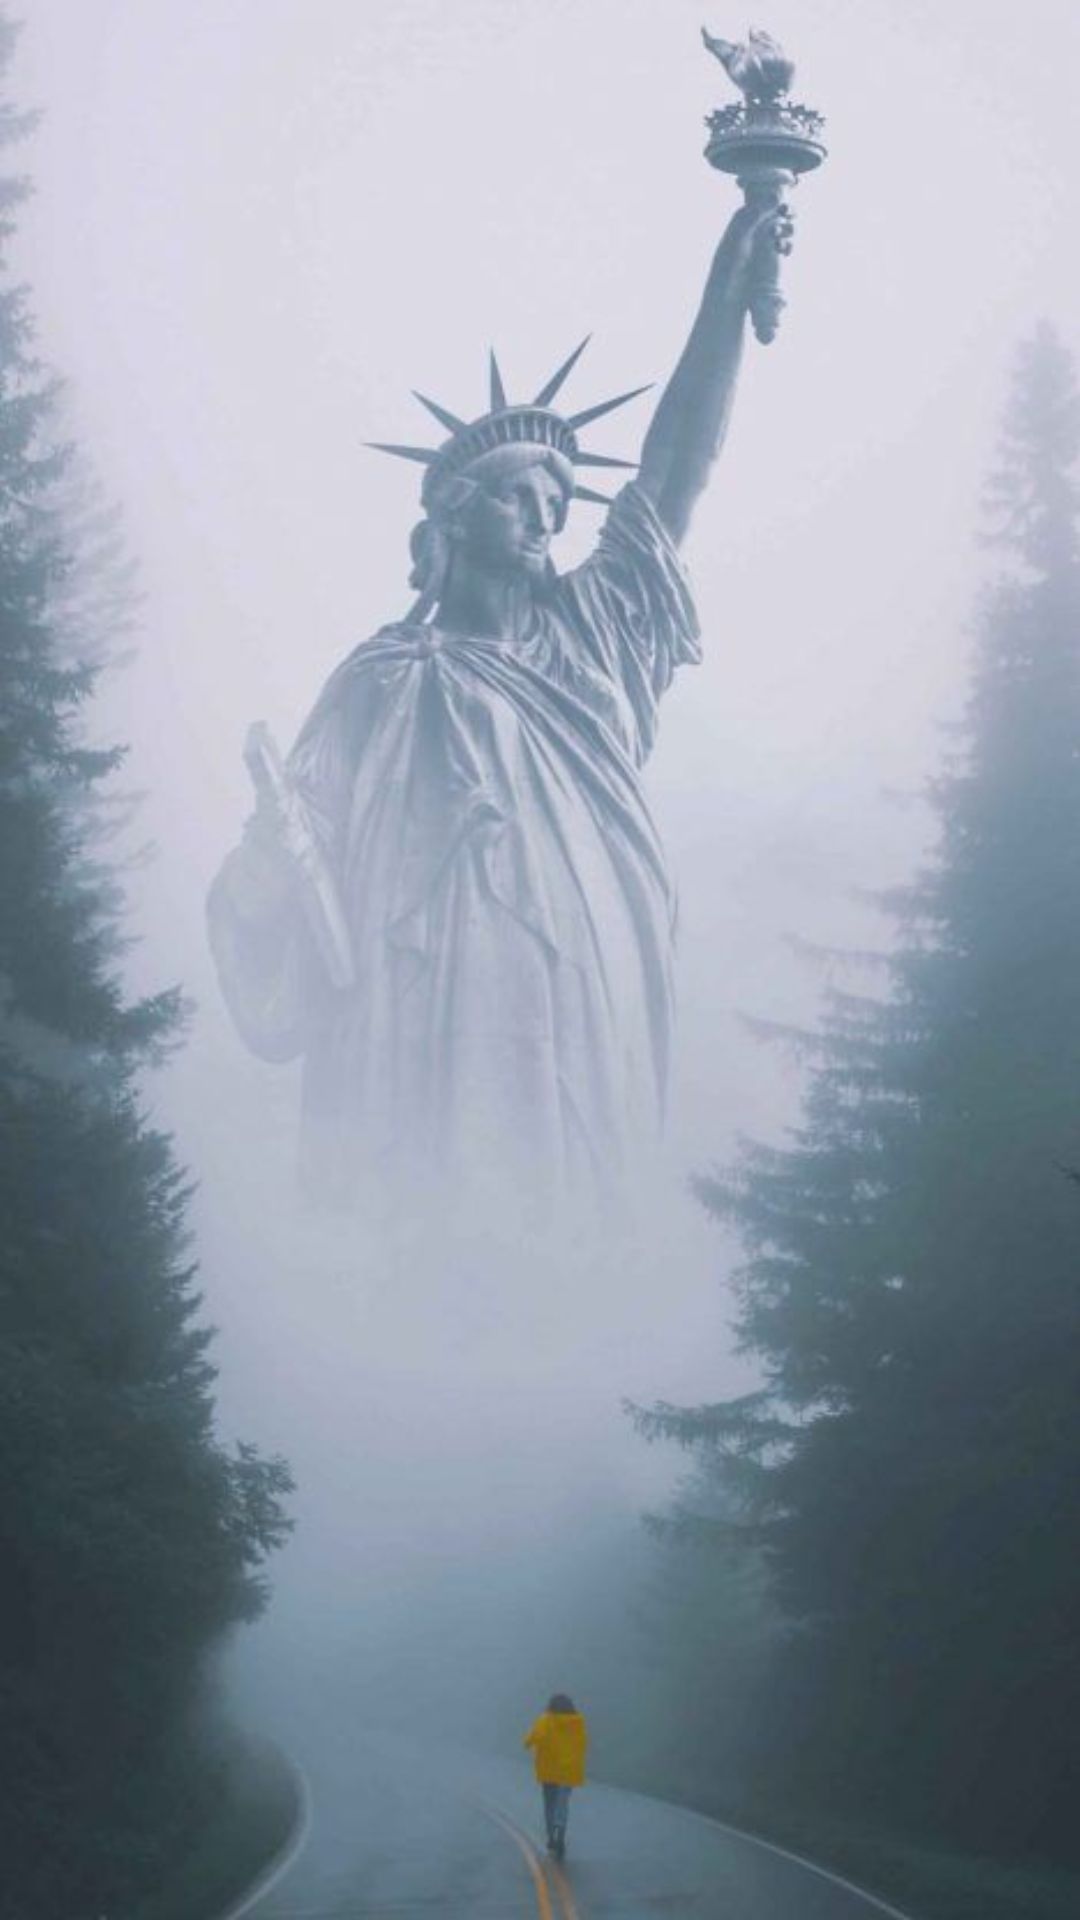 Statue of Liberty Wallpaper 1080x1920 1